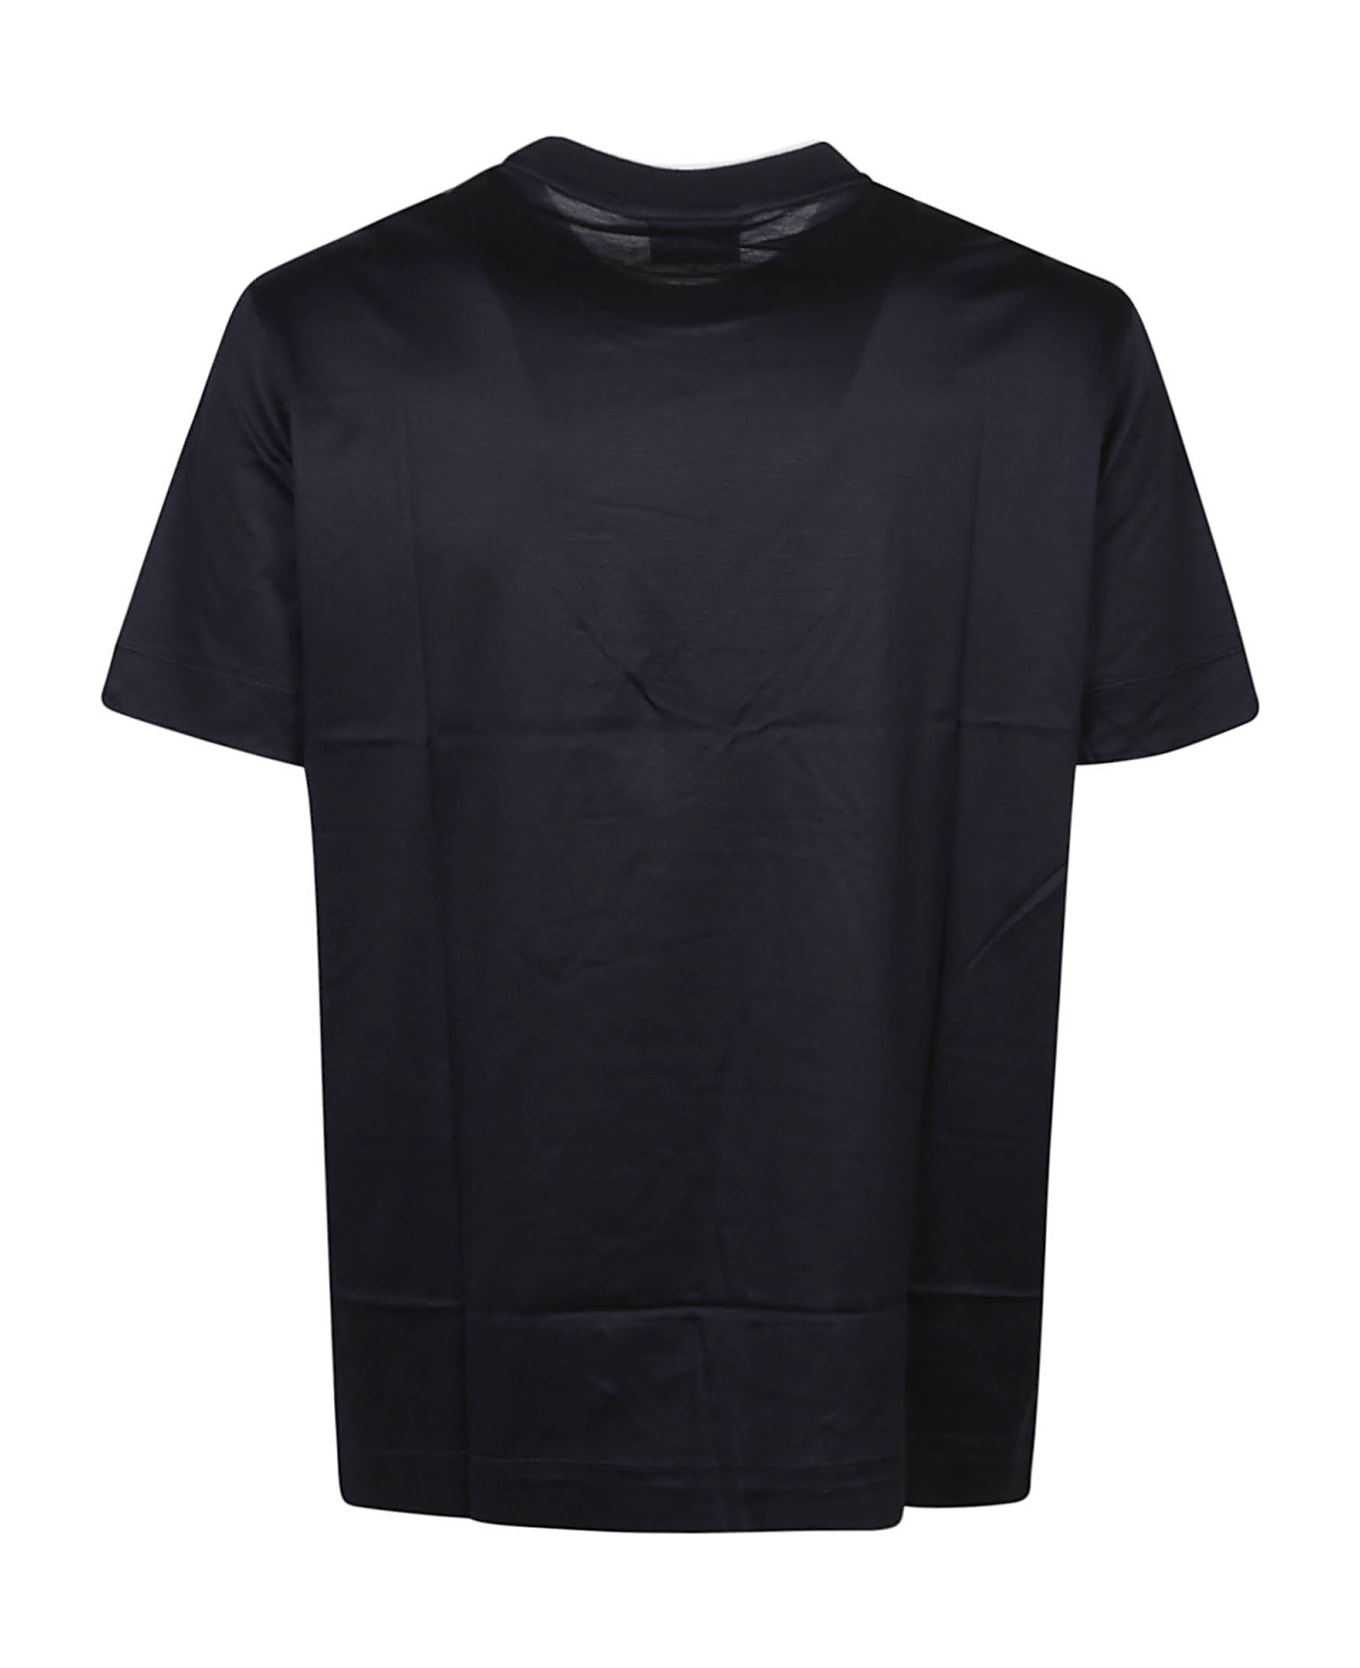 Emporio blanket Armani T-shirt - Eagle Navy